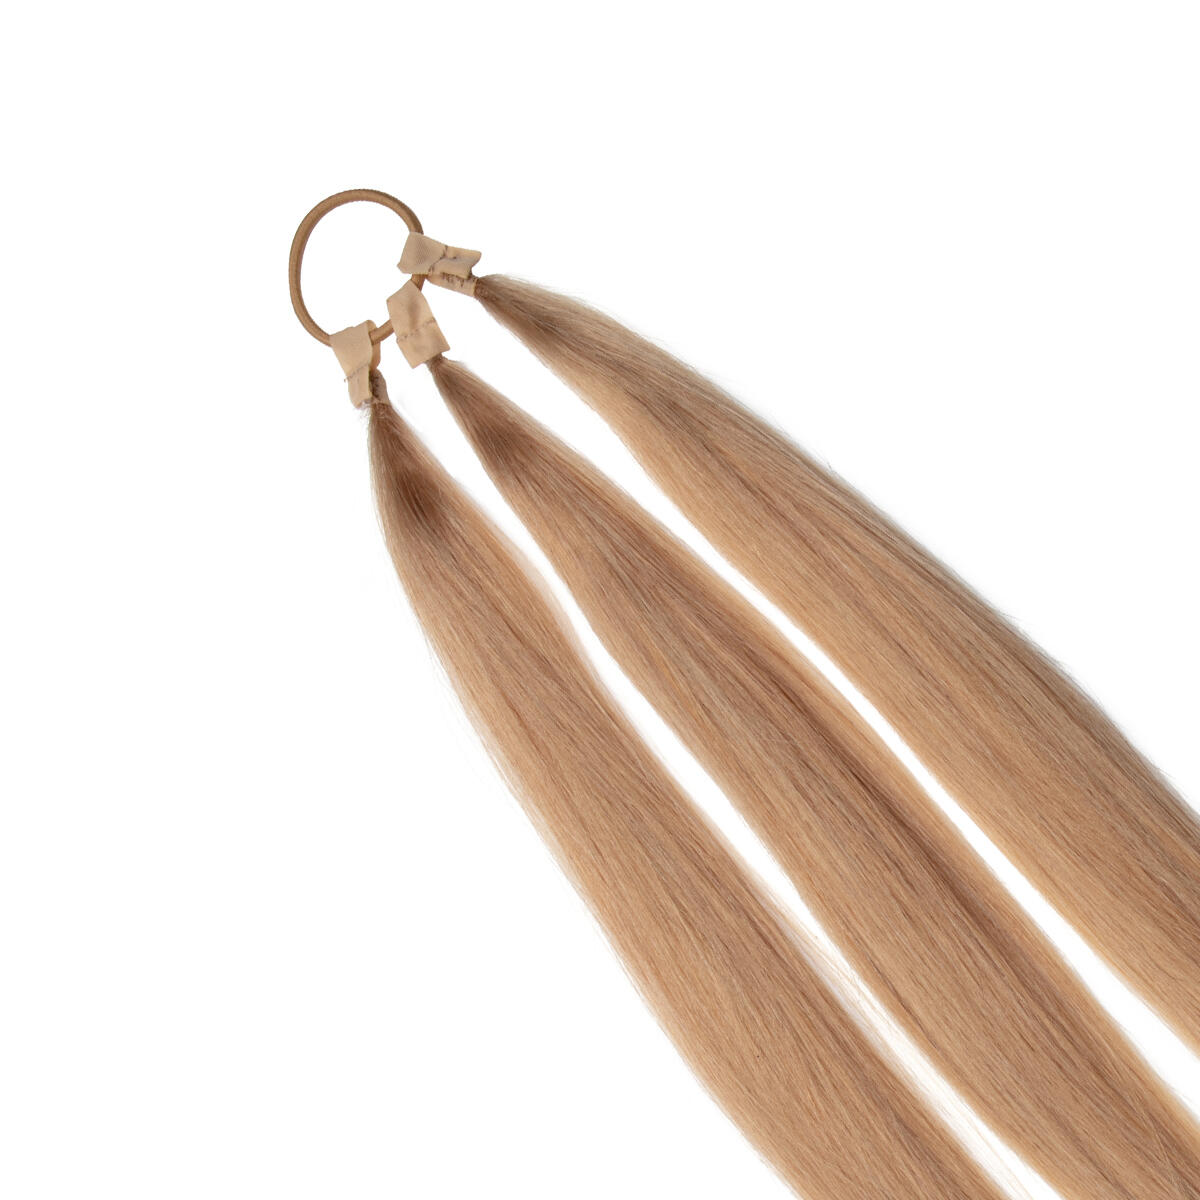 Easy Braid For voluminous braids 7.5 Dark Blonde 55 cm